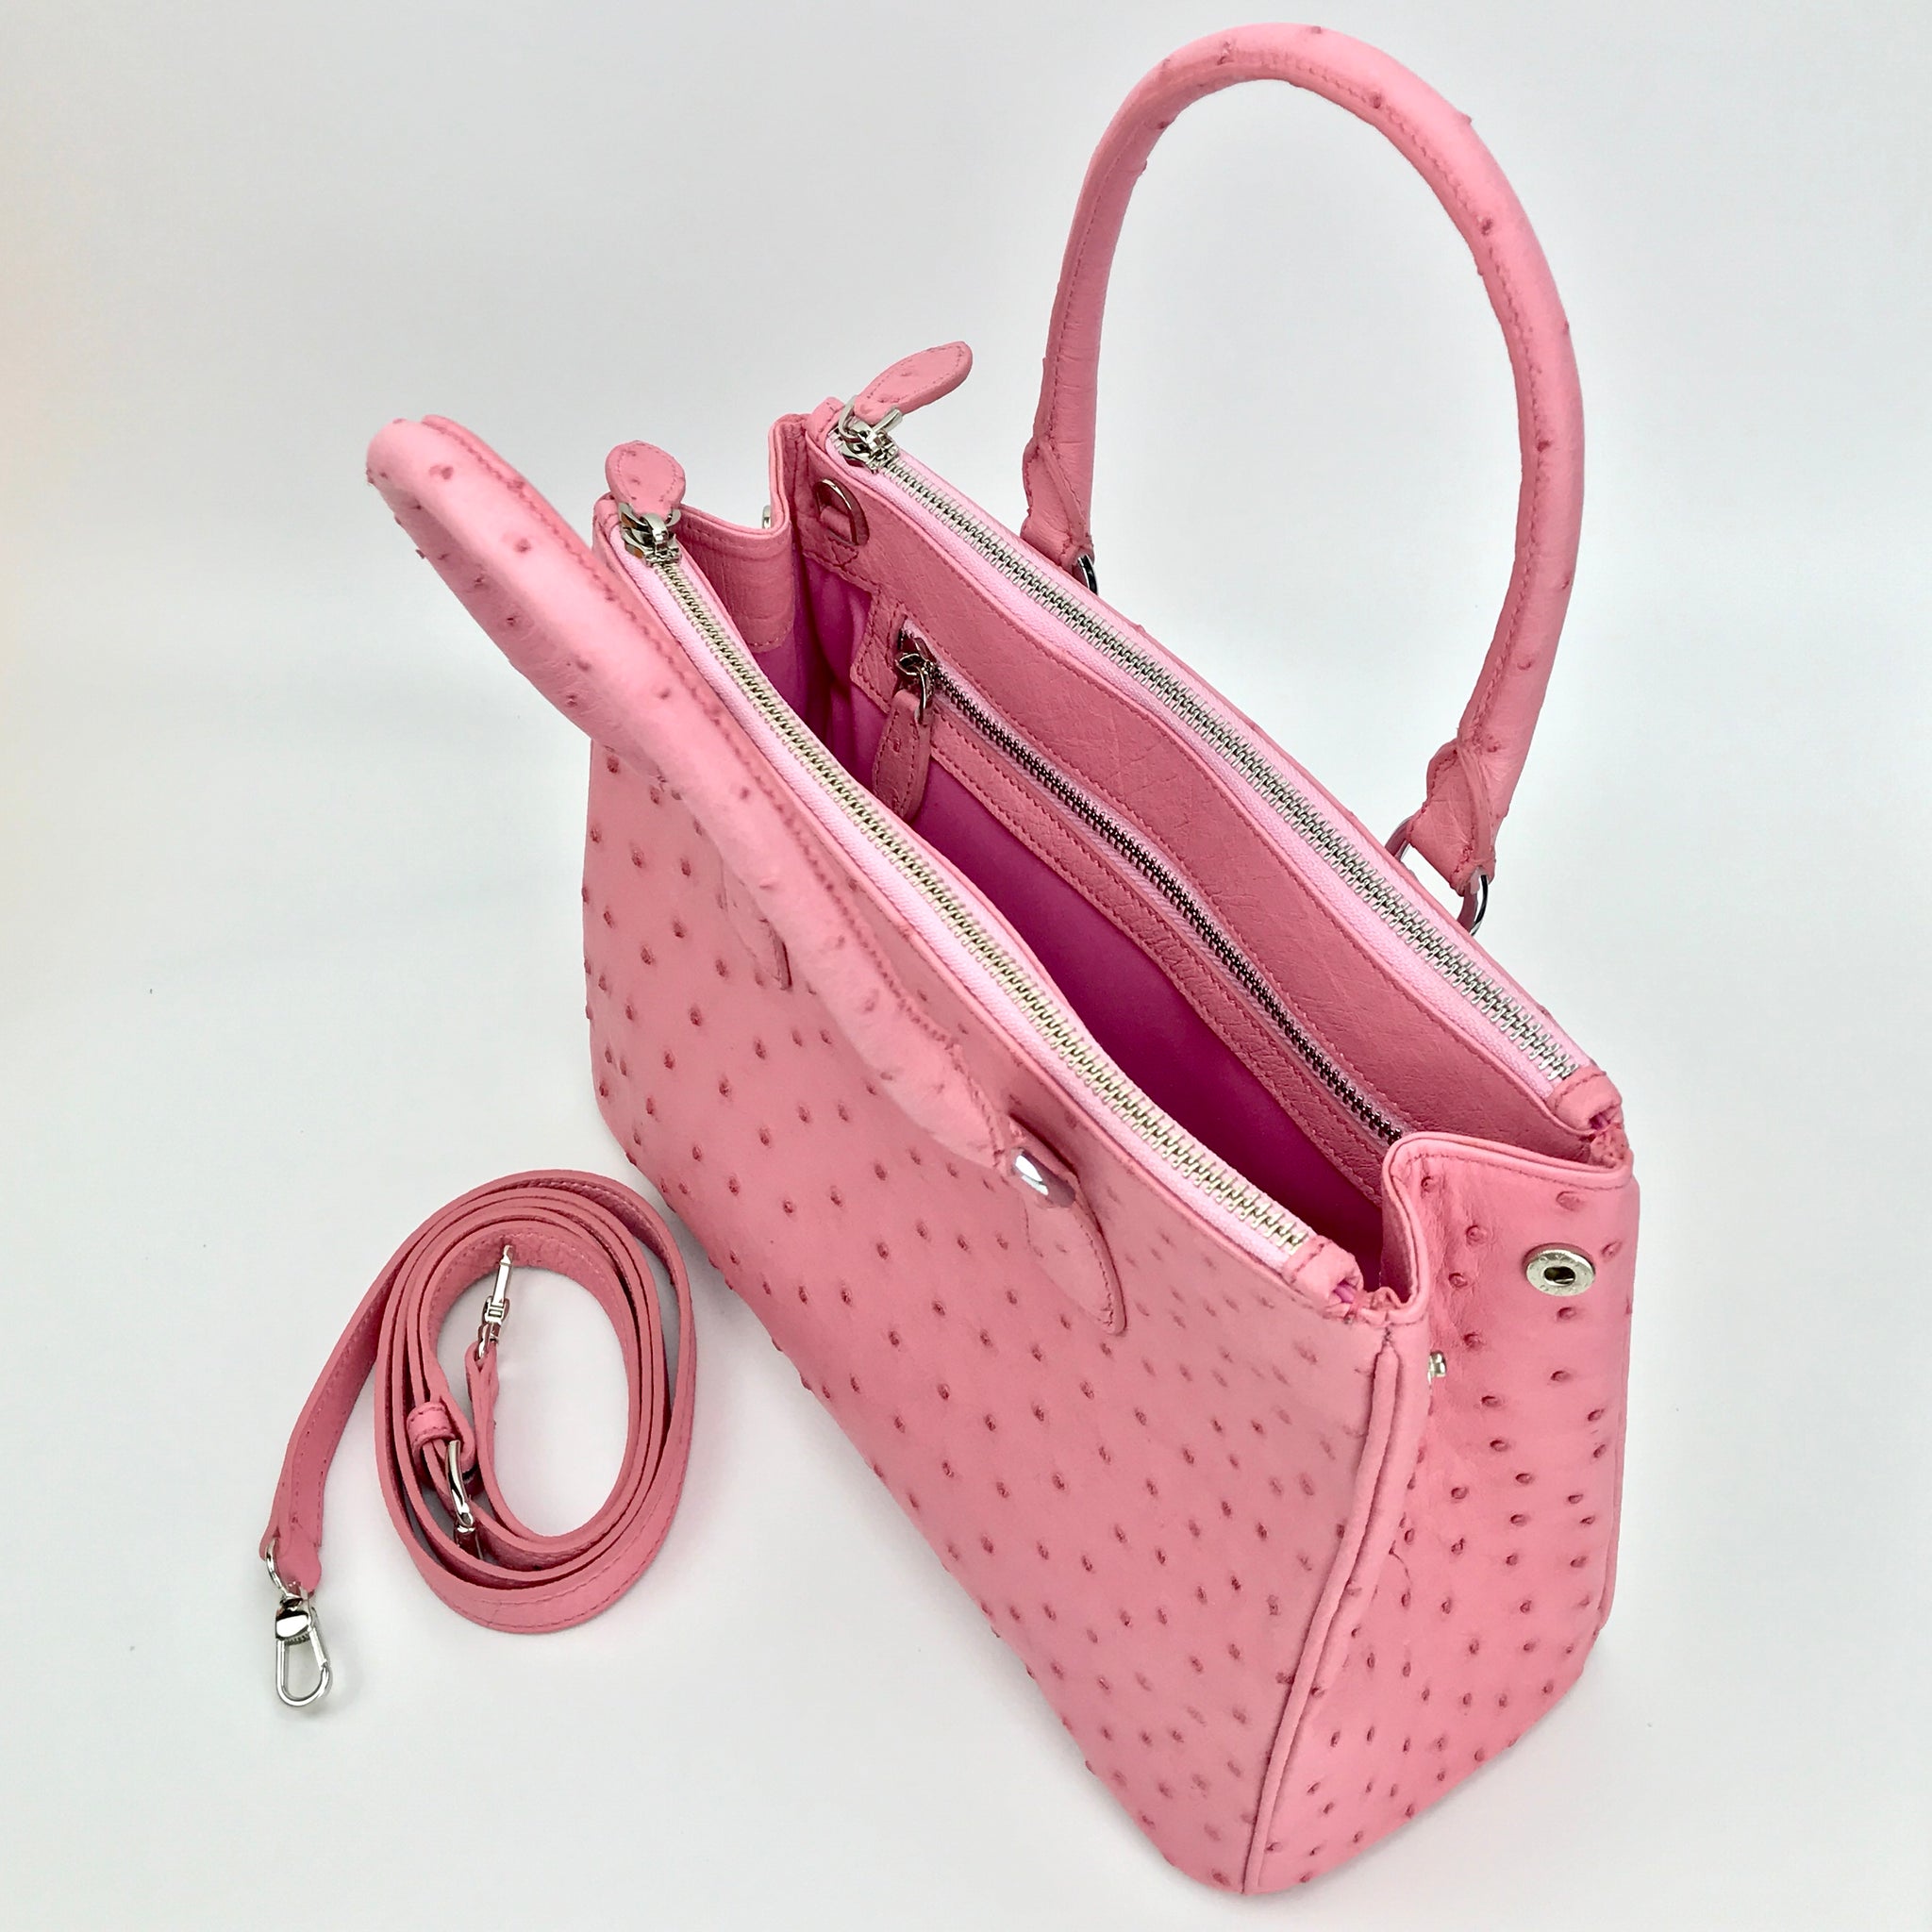 52 Pink Ostrich Bag Images, Stock Photos, 3D objects, & Vectors